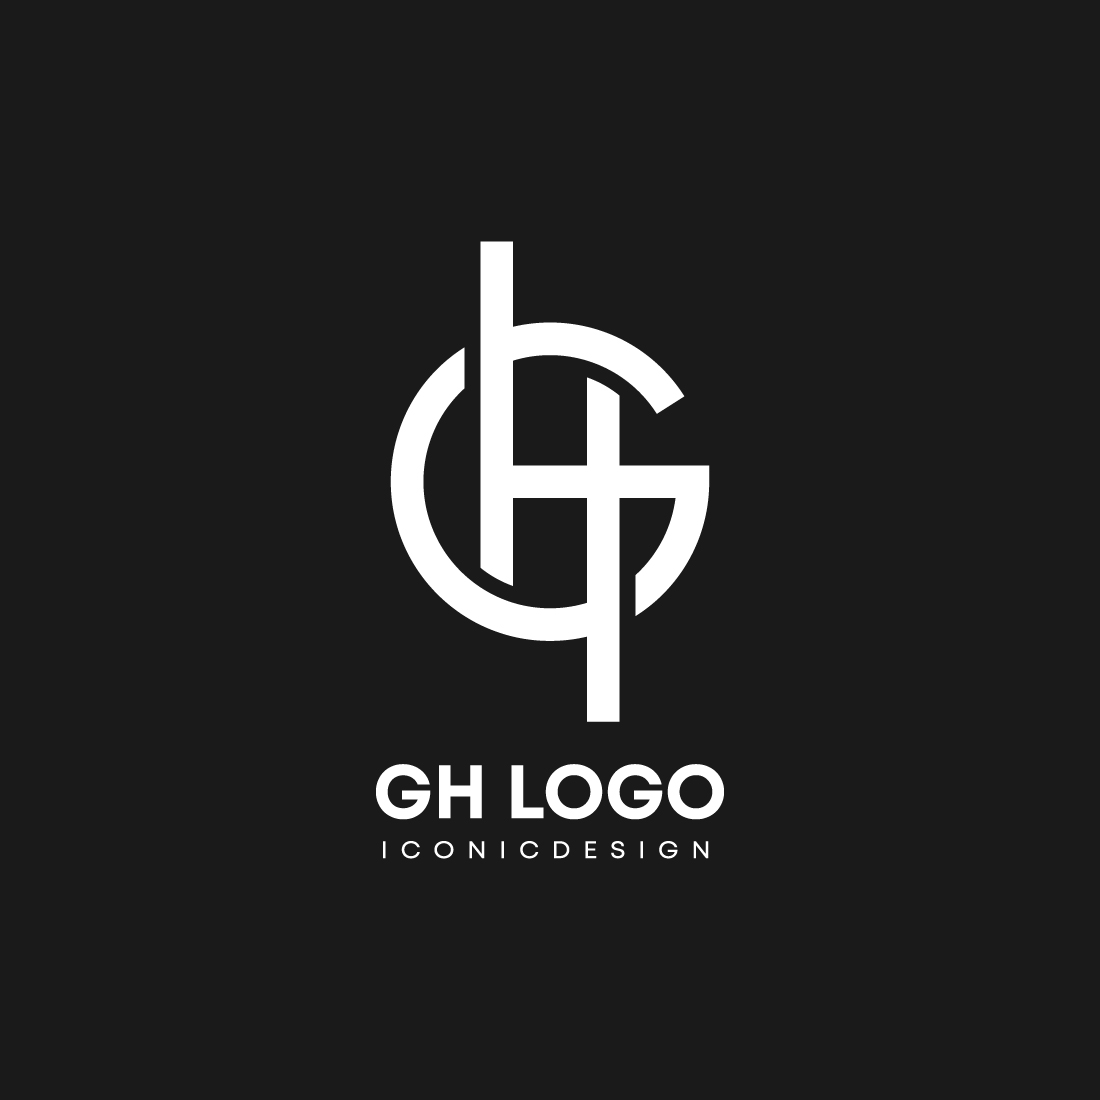 Premium Vector | Gh logo